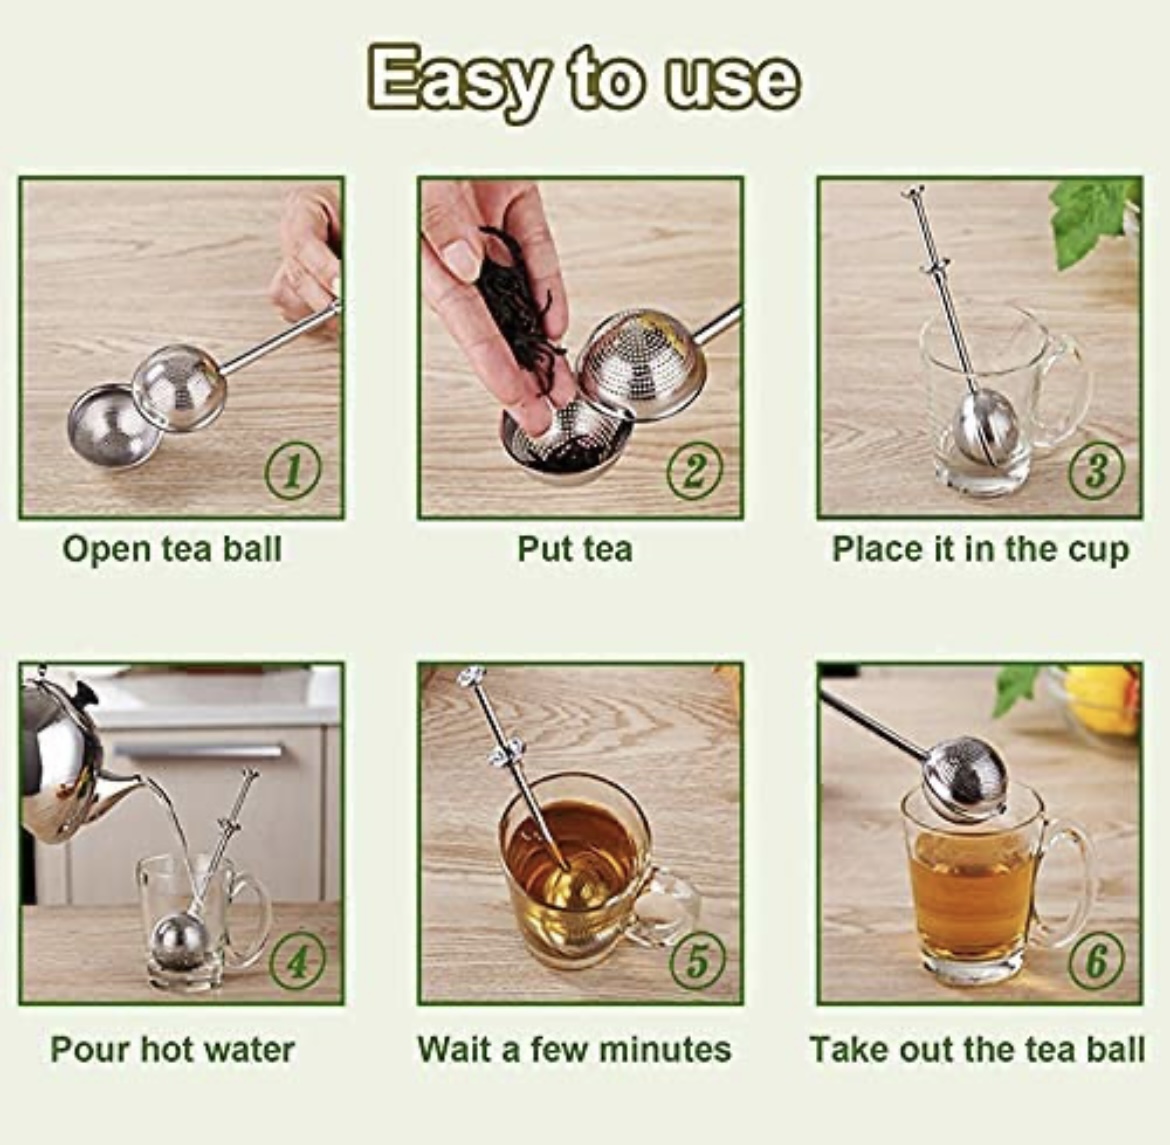 Product: Shuddh Natural Tea Infuser